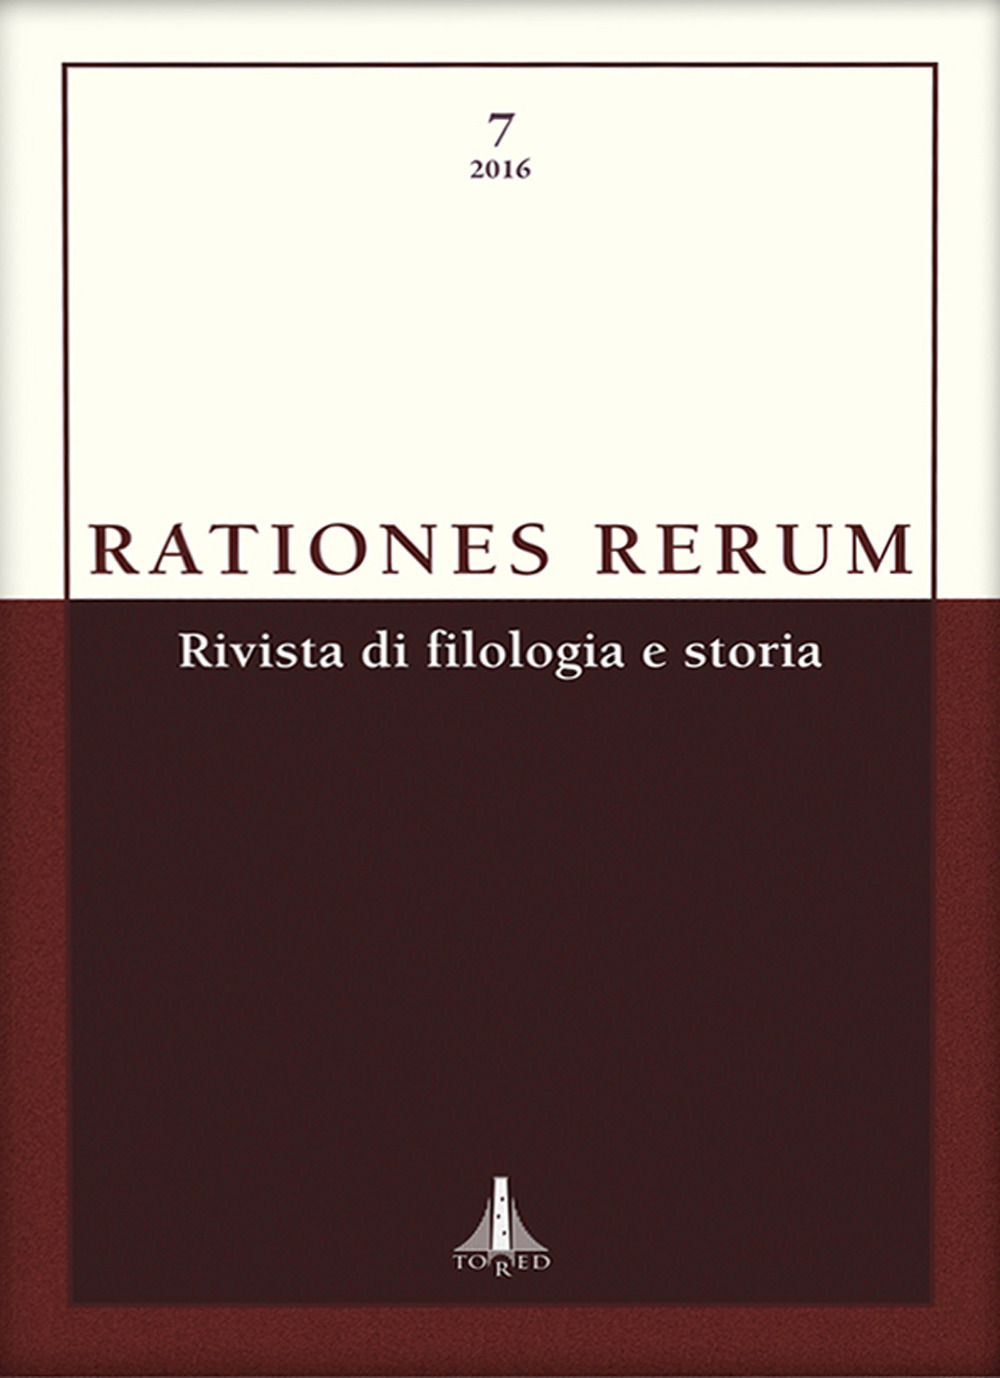 Rationes rerum. Rivista di filologia e storia. Ediz. multilingue. Vol. 7